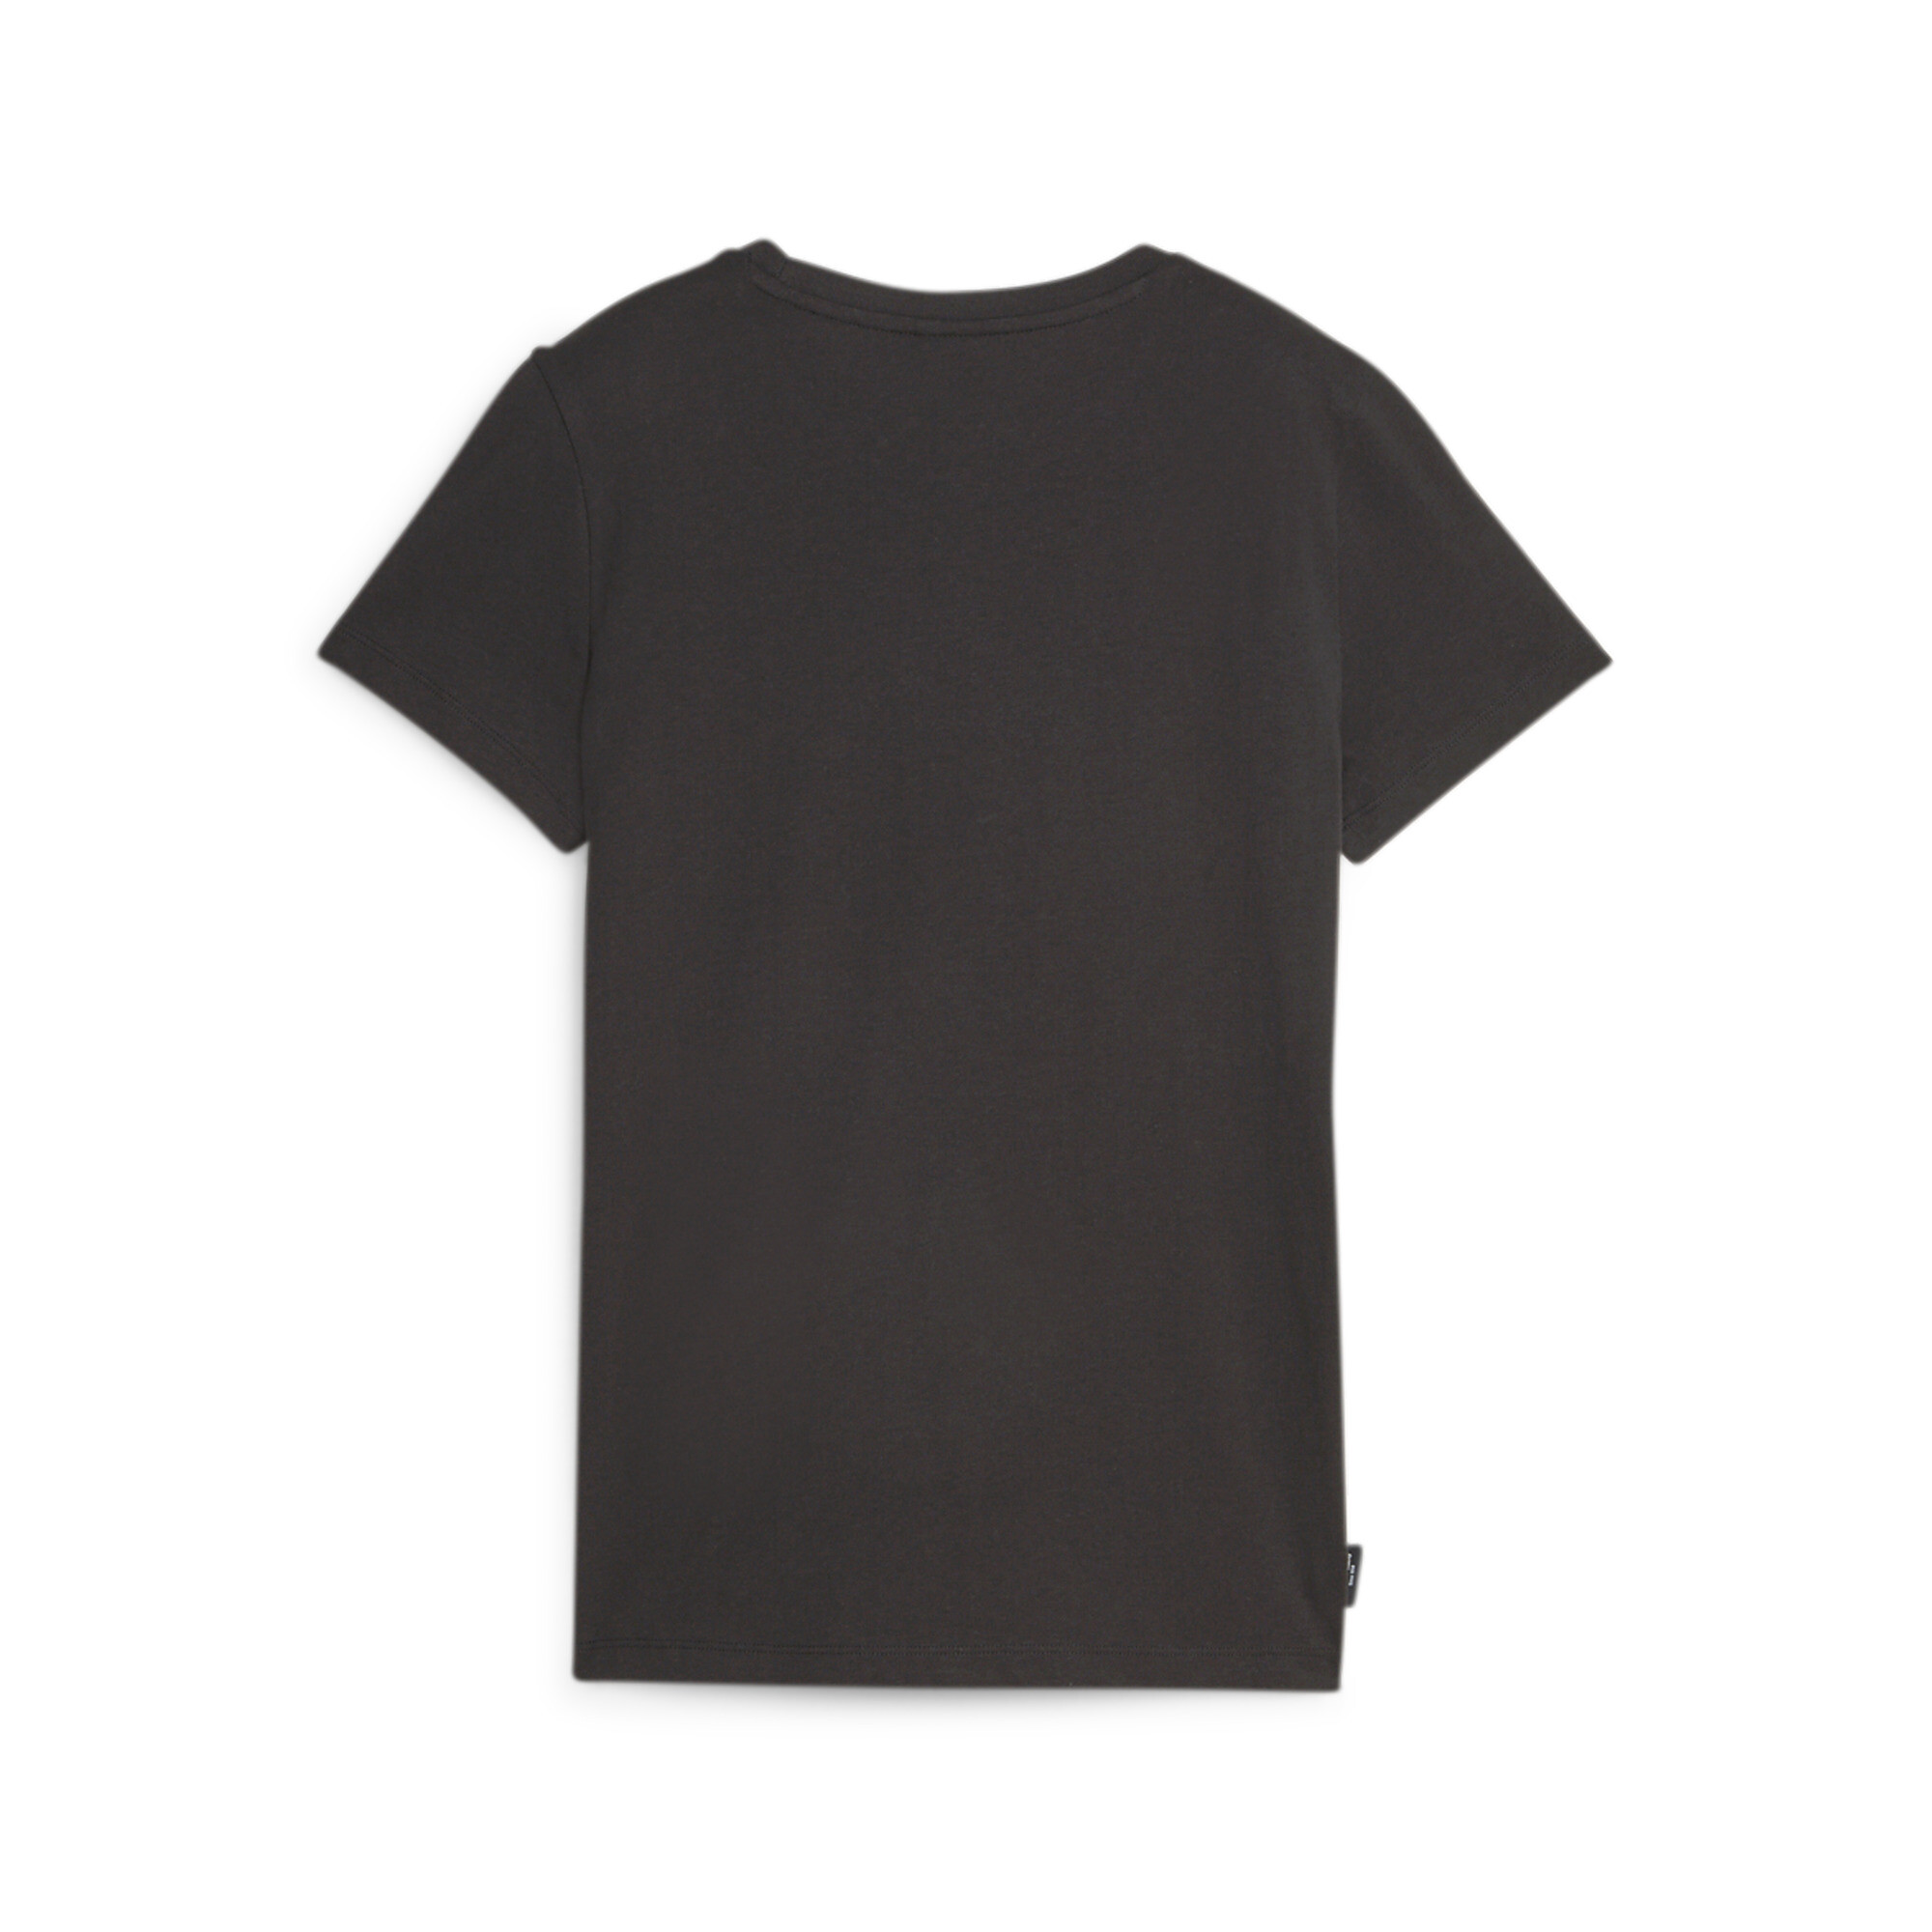 Women's Sportswear By PUMA Graphic T-Shirt In Black, Size Large